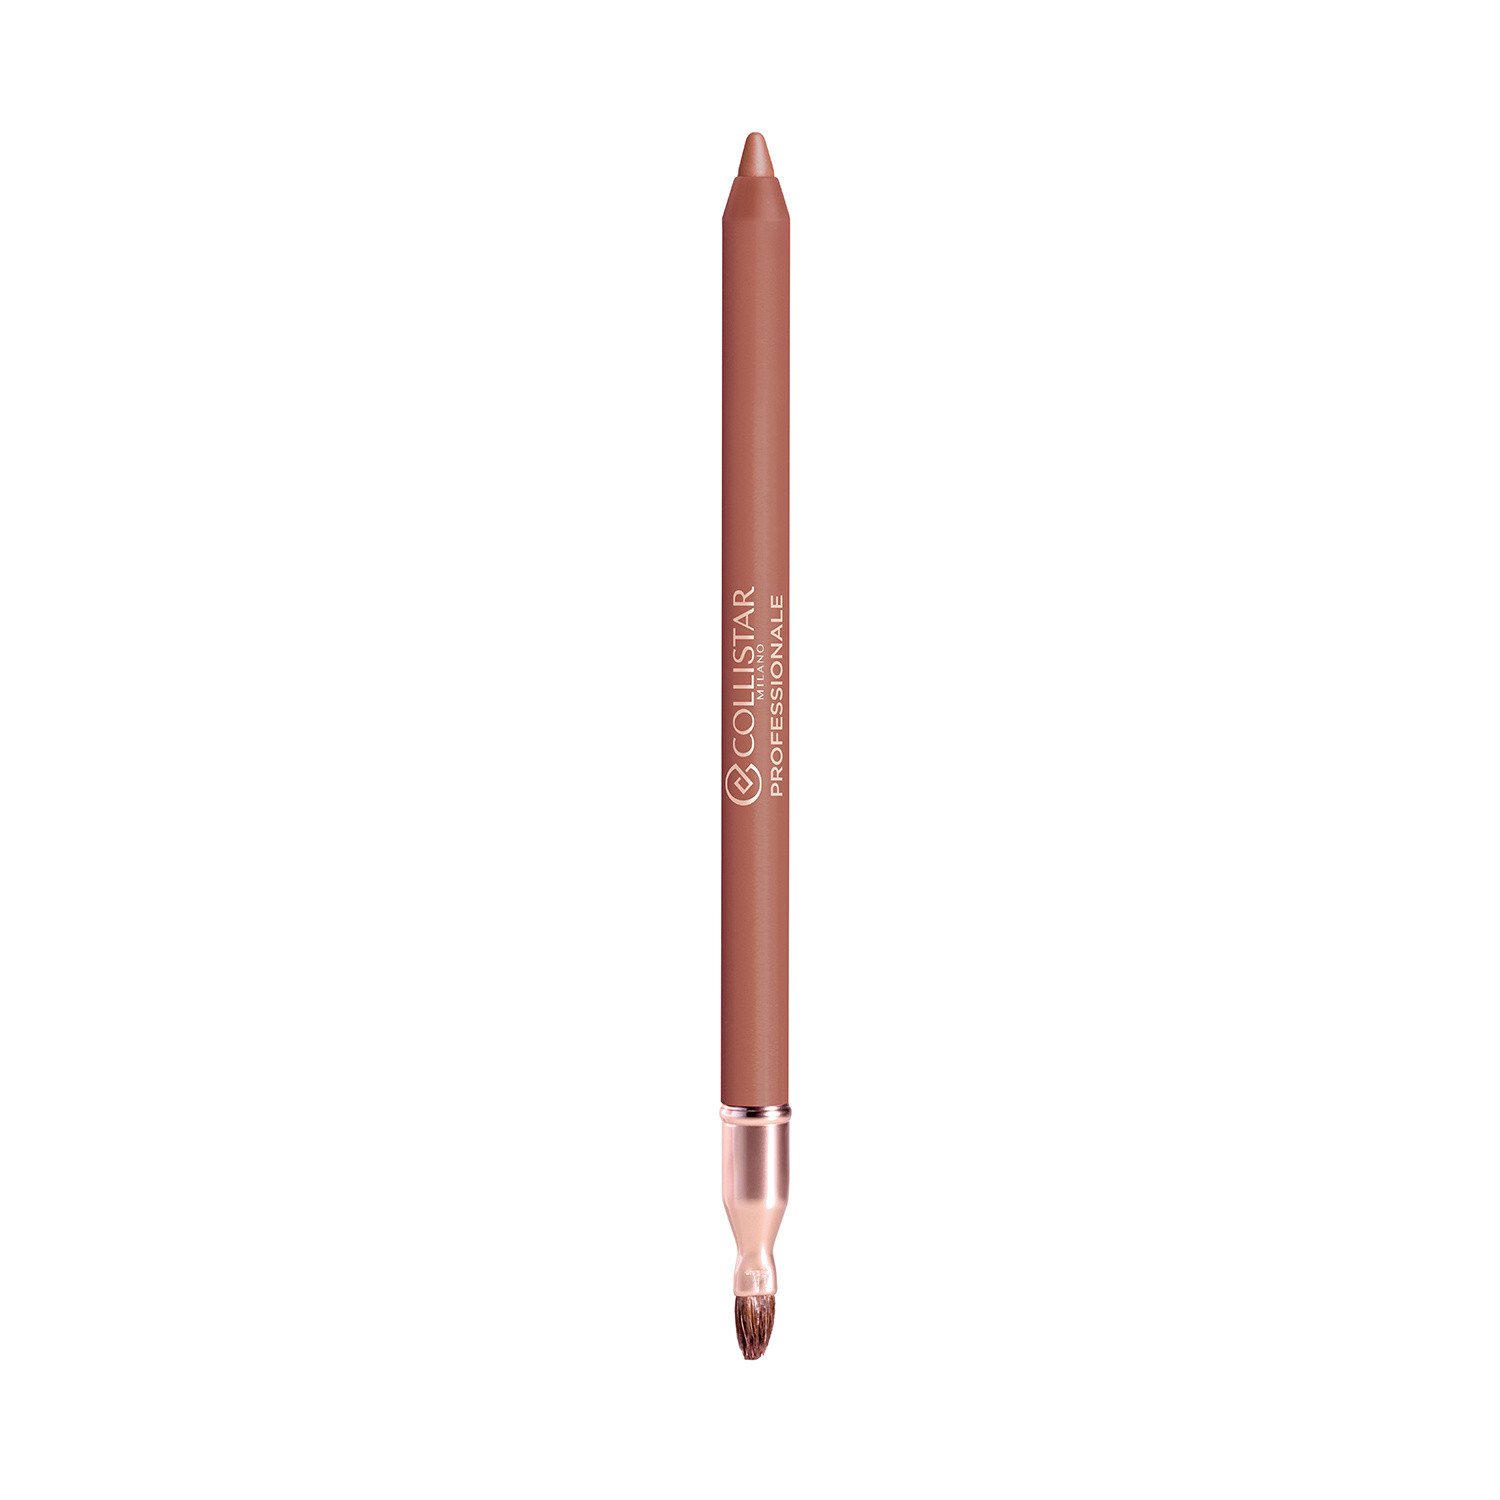 Collistar - Professional long lasting lip pencil - 1 Natural, Natural, large image number 1